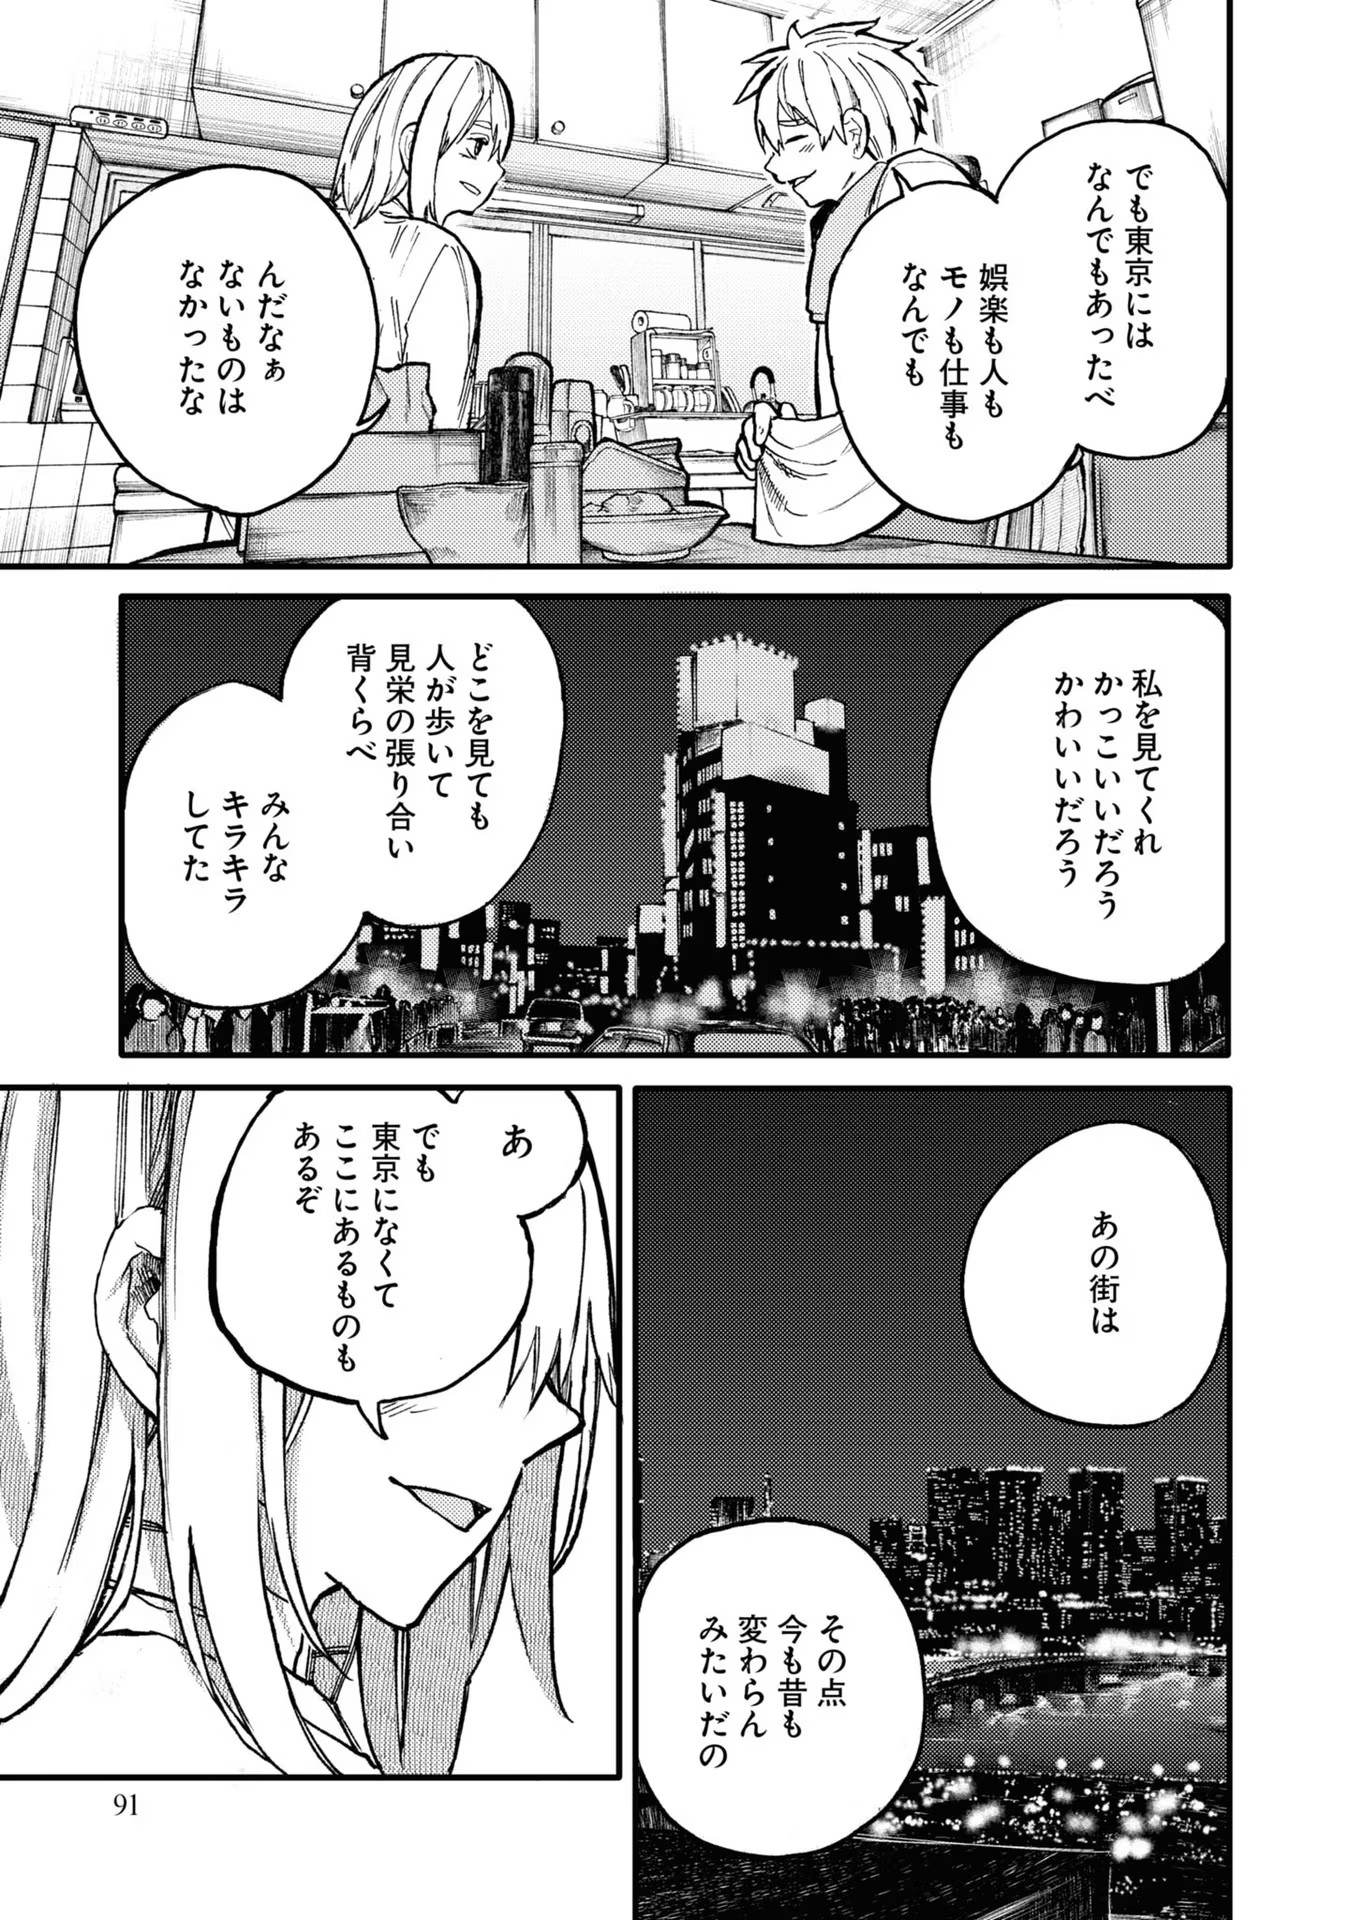 Ojii-san to Obaa-san ga Wakigaetta Hanashi - Chapter 40 - Page 3